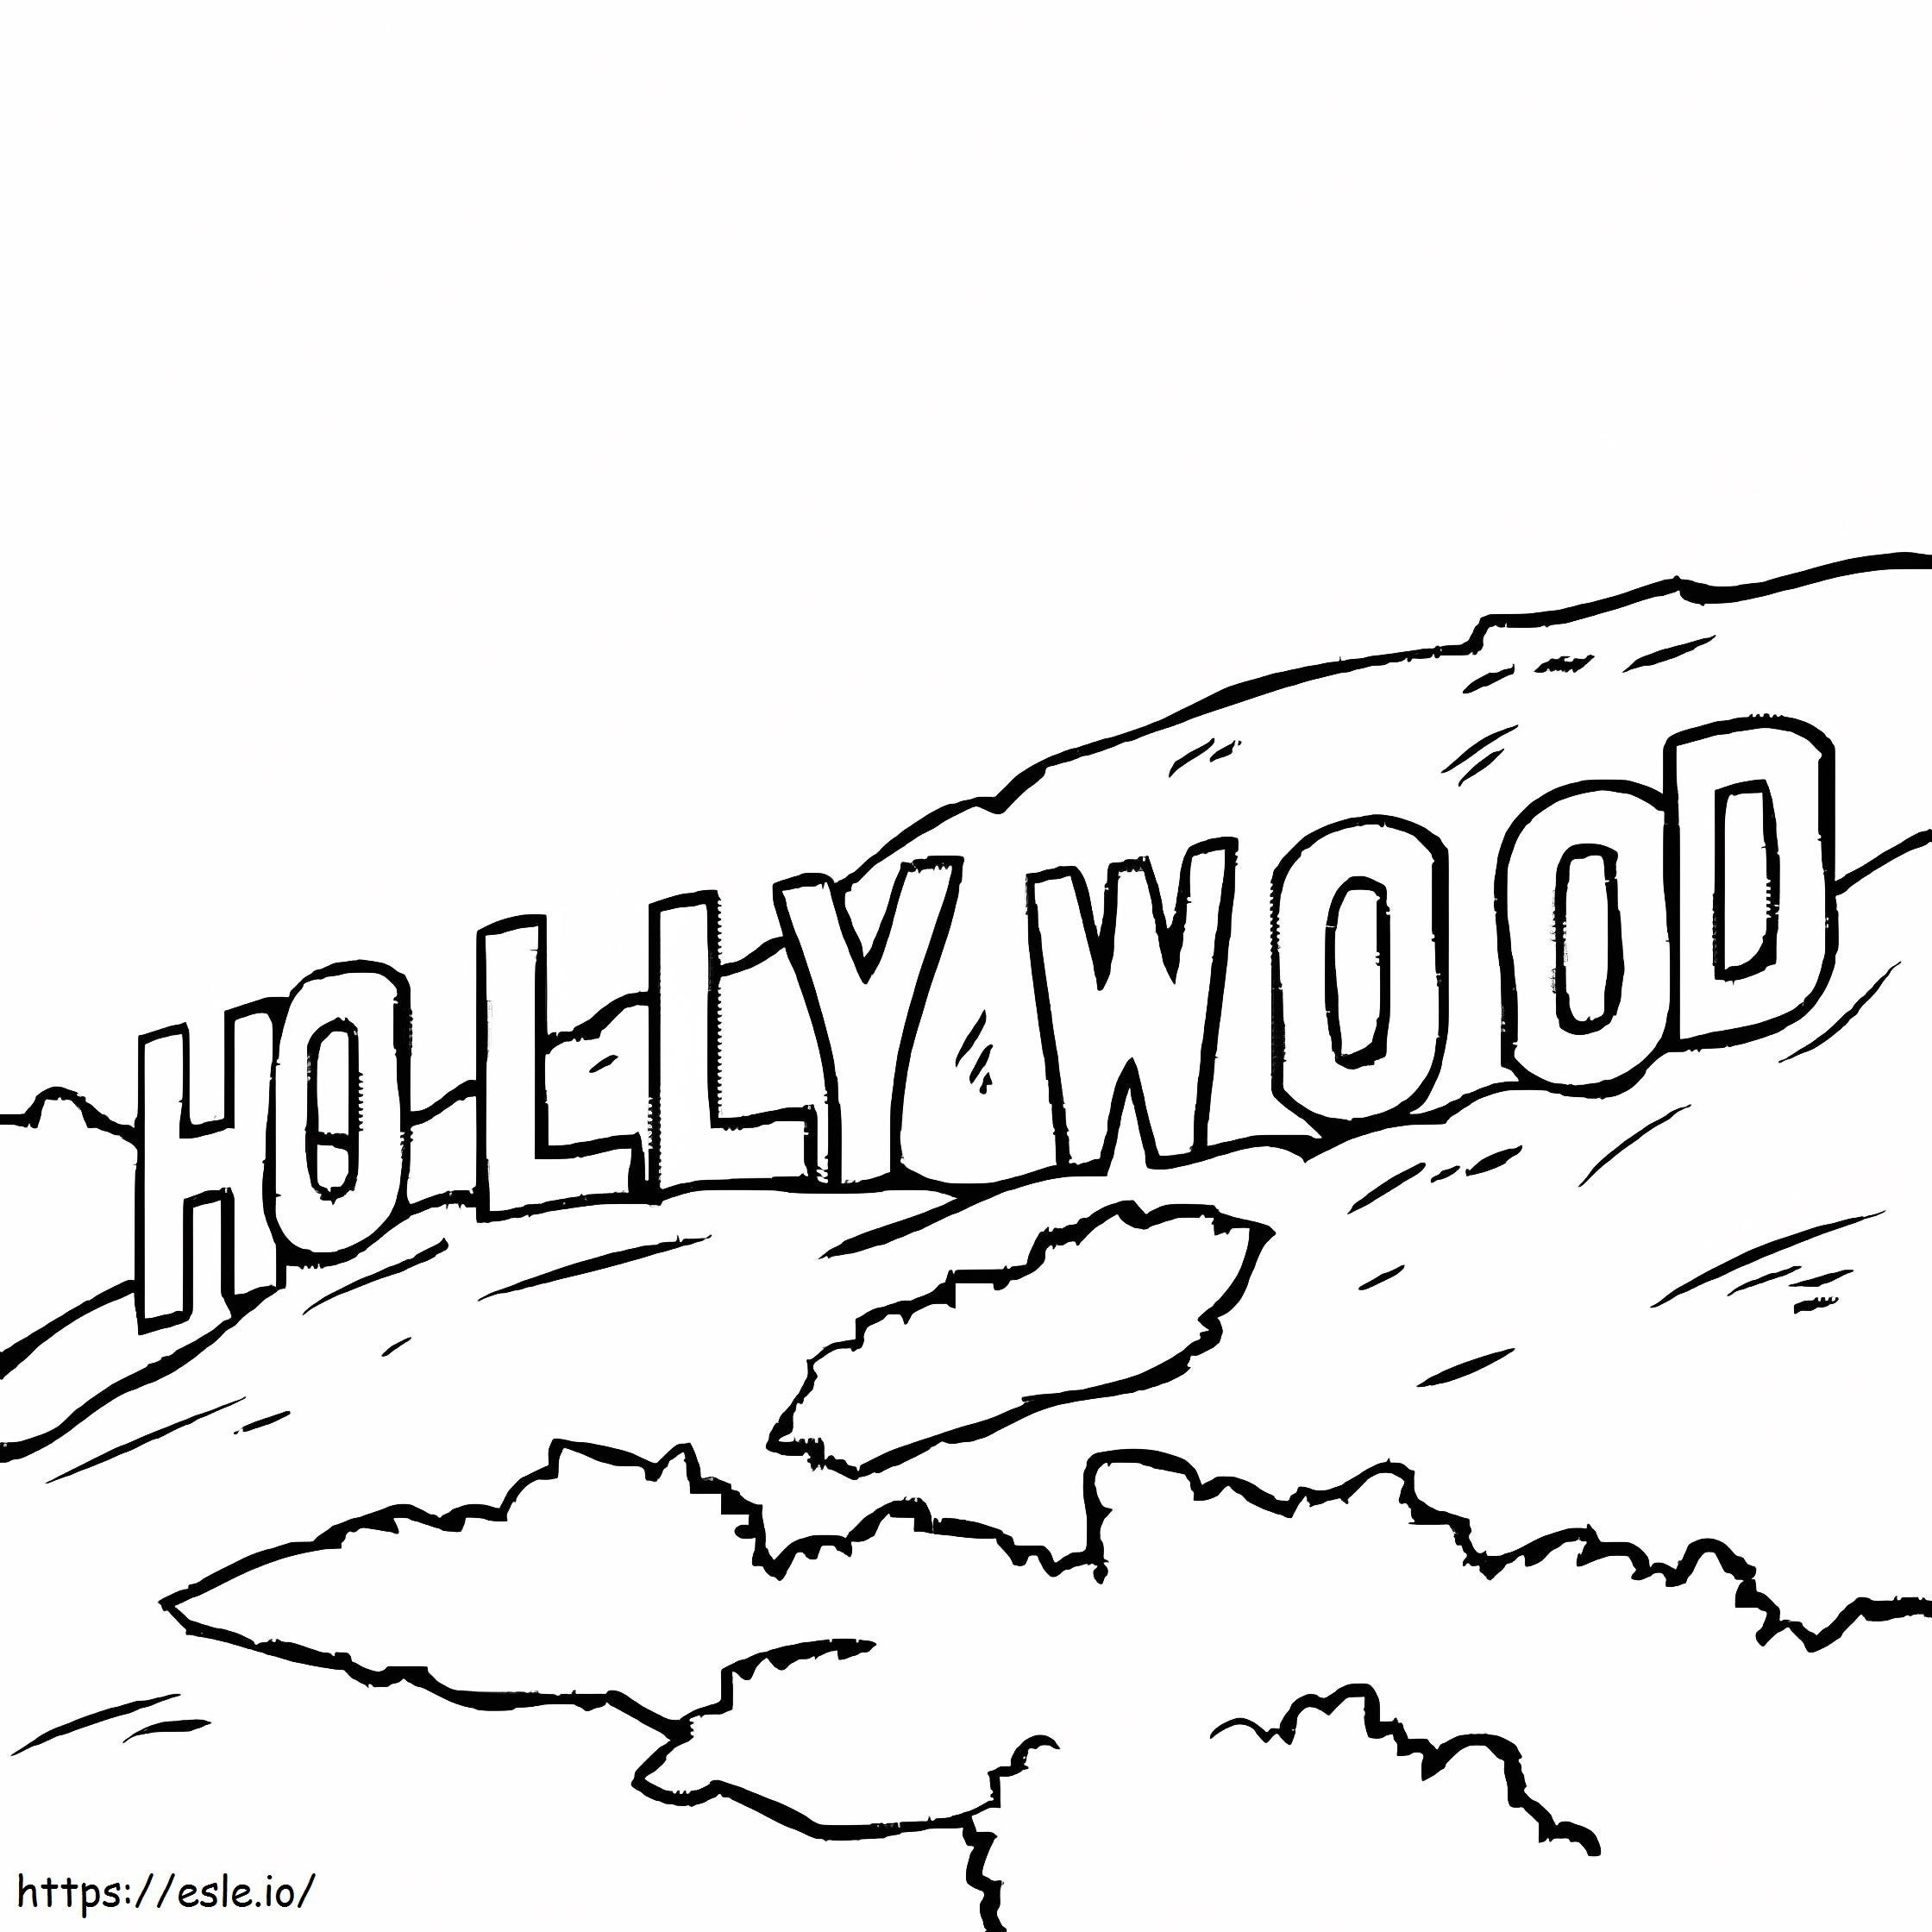 Afdrukken Hollywood kleurplaat kleurplaat